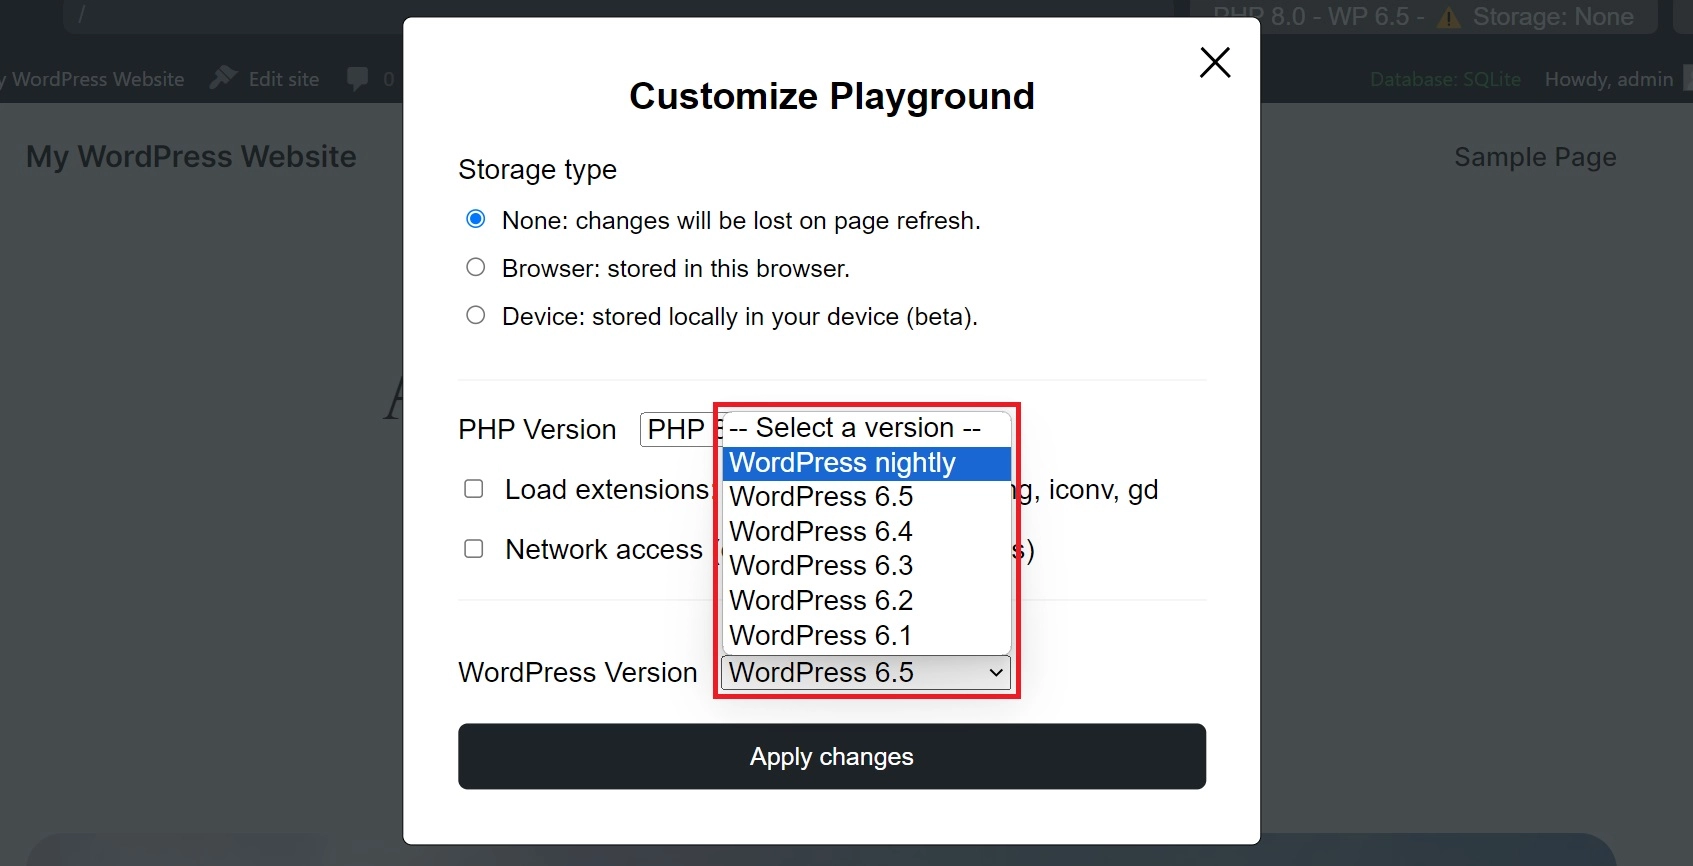 Select WordPress version